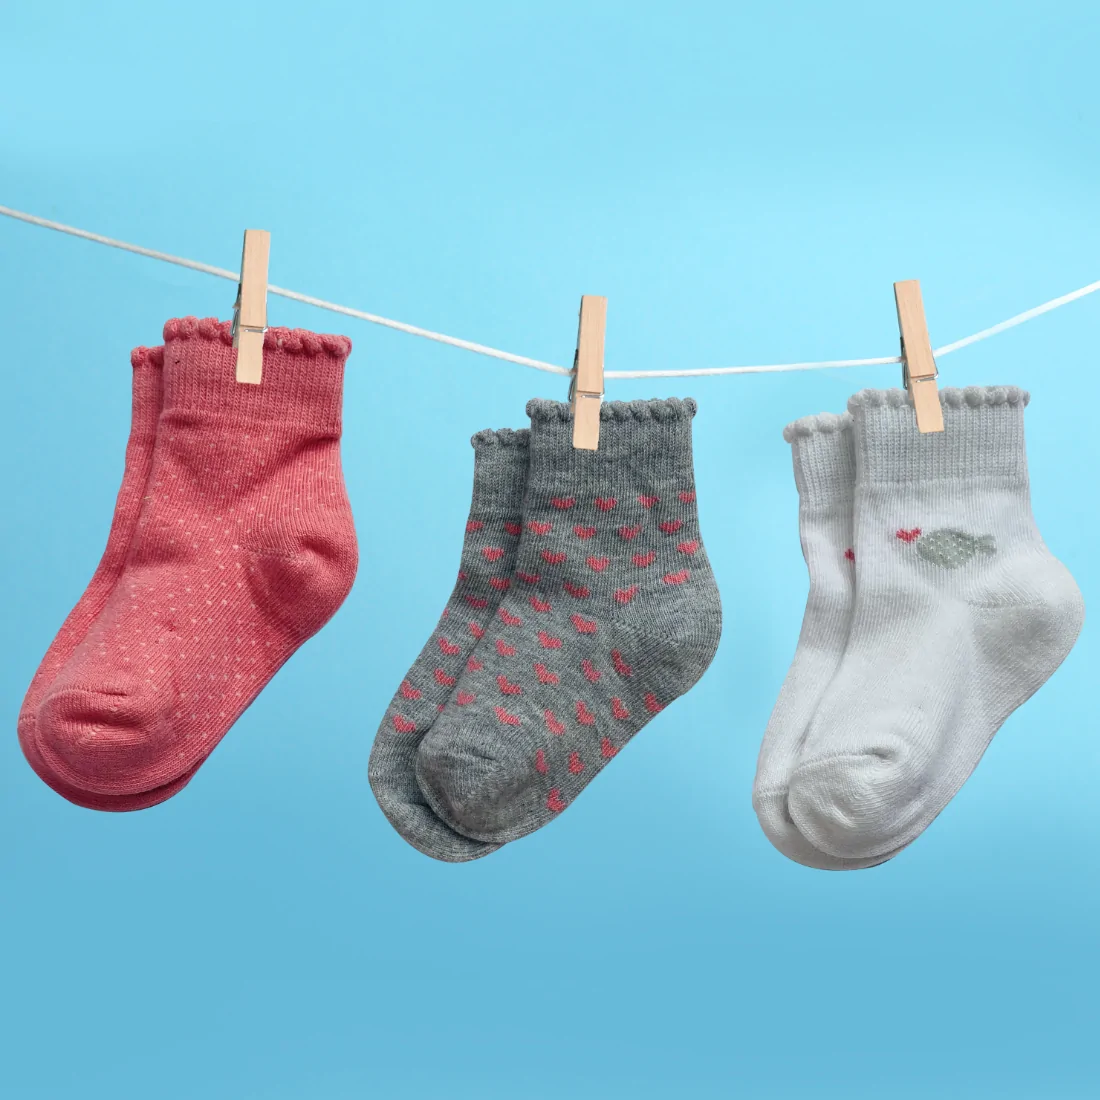 Antibacterial Baby Socks - Elasticated & Ankle Length - (12-24 Months) Cute Girls Picot